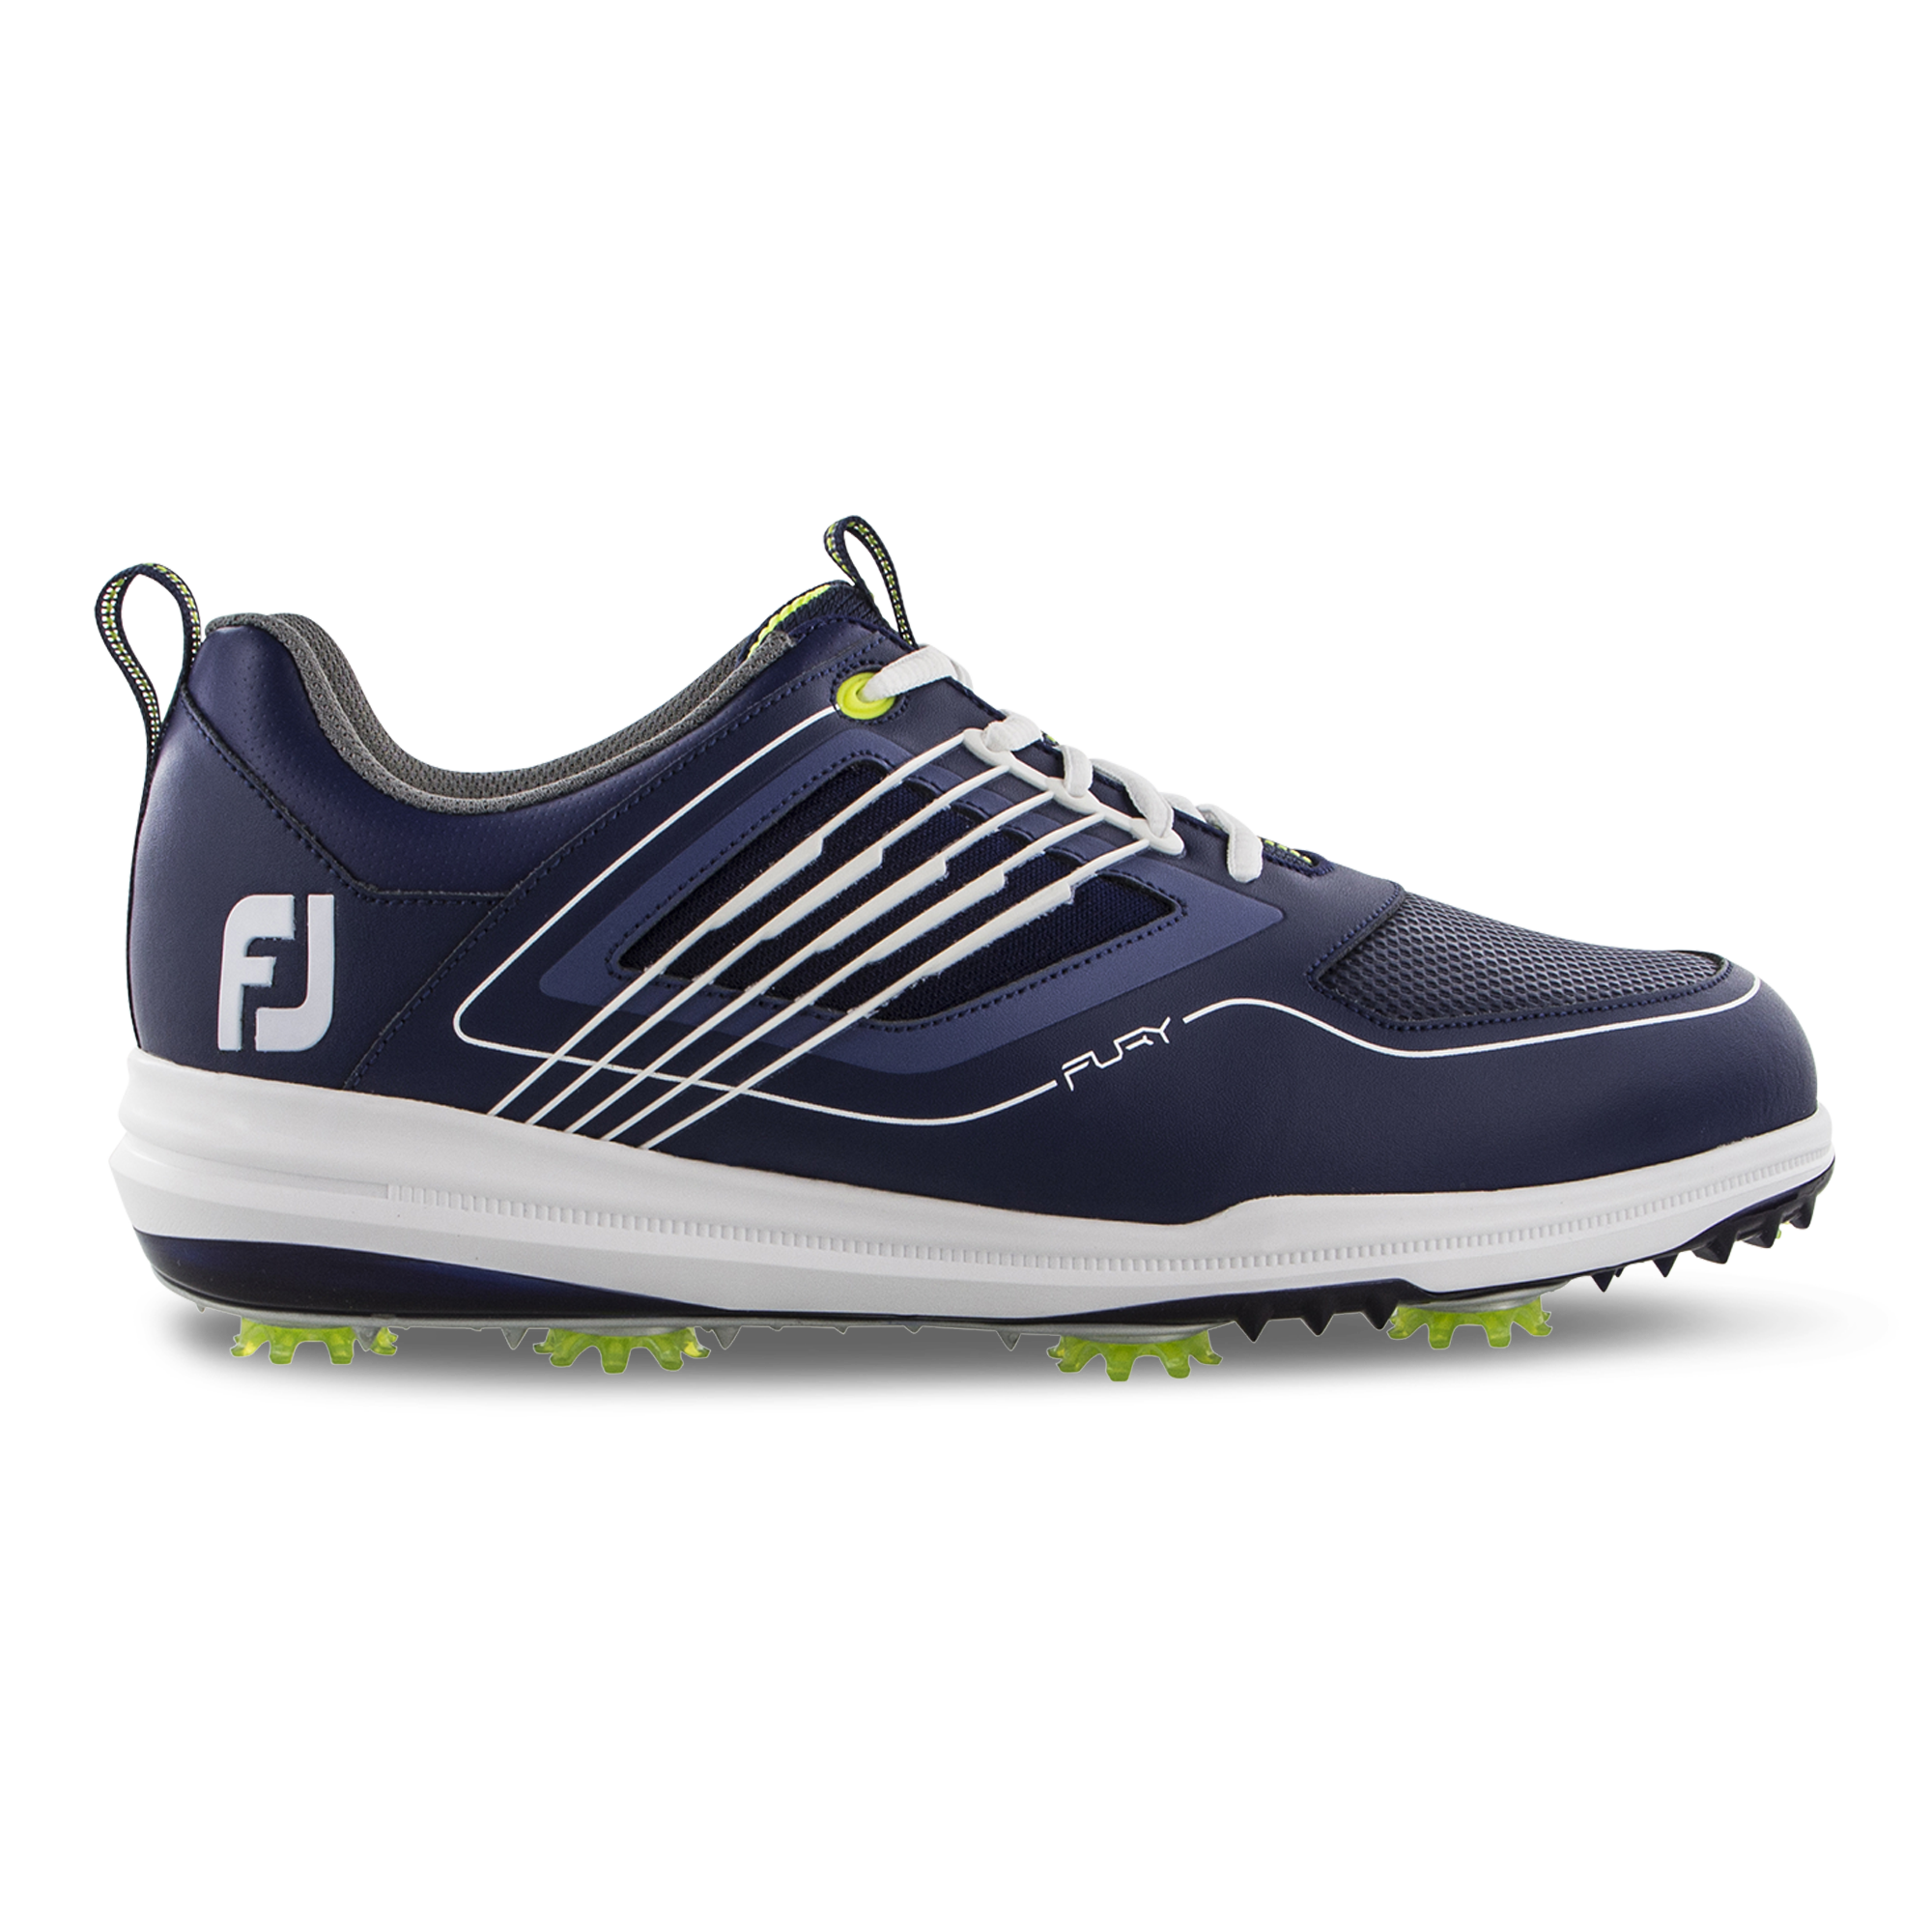 Men's Spiked Golf Shoes | FJ FURY | FootJoy